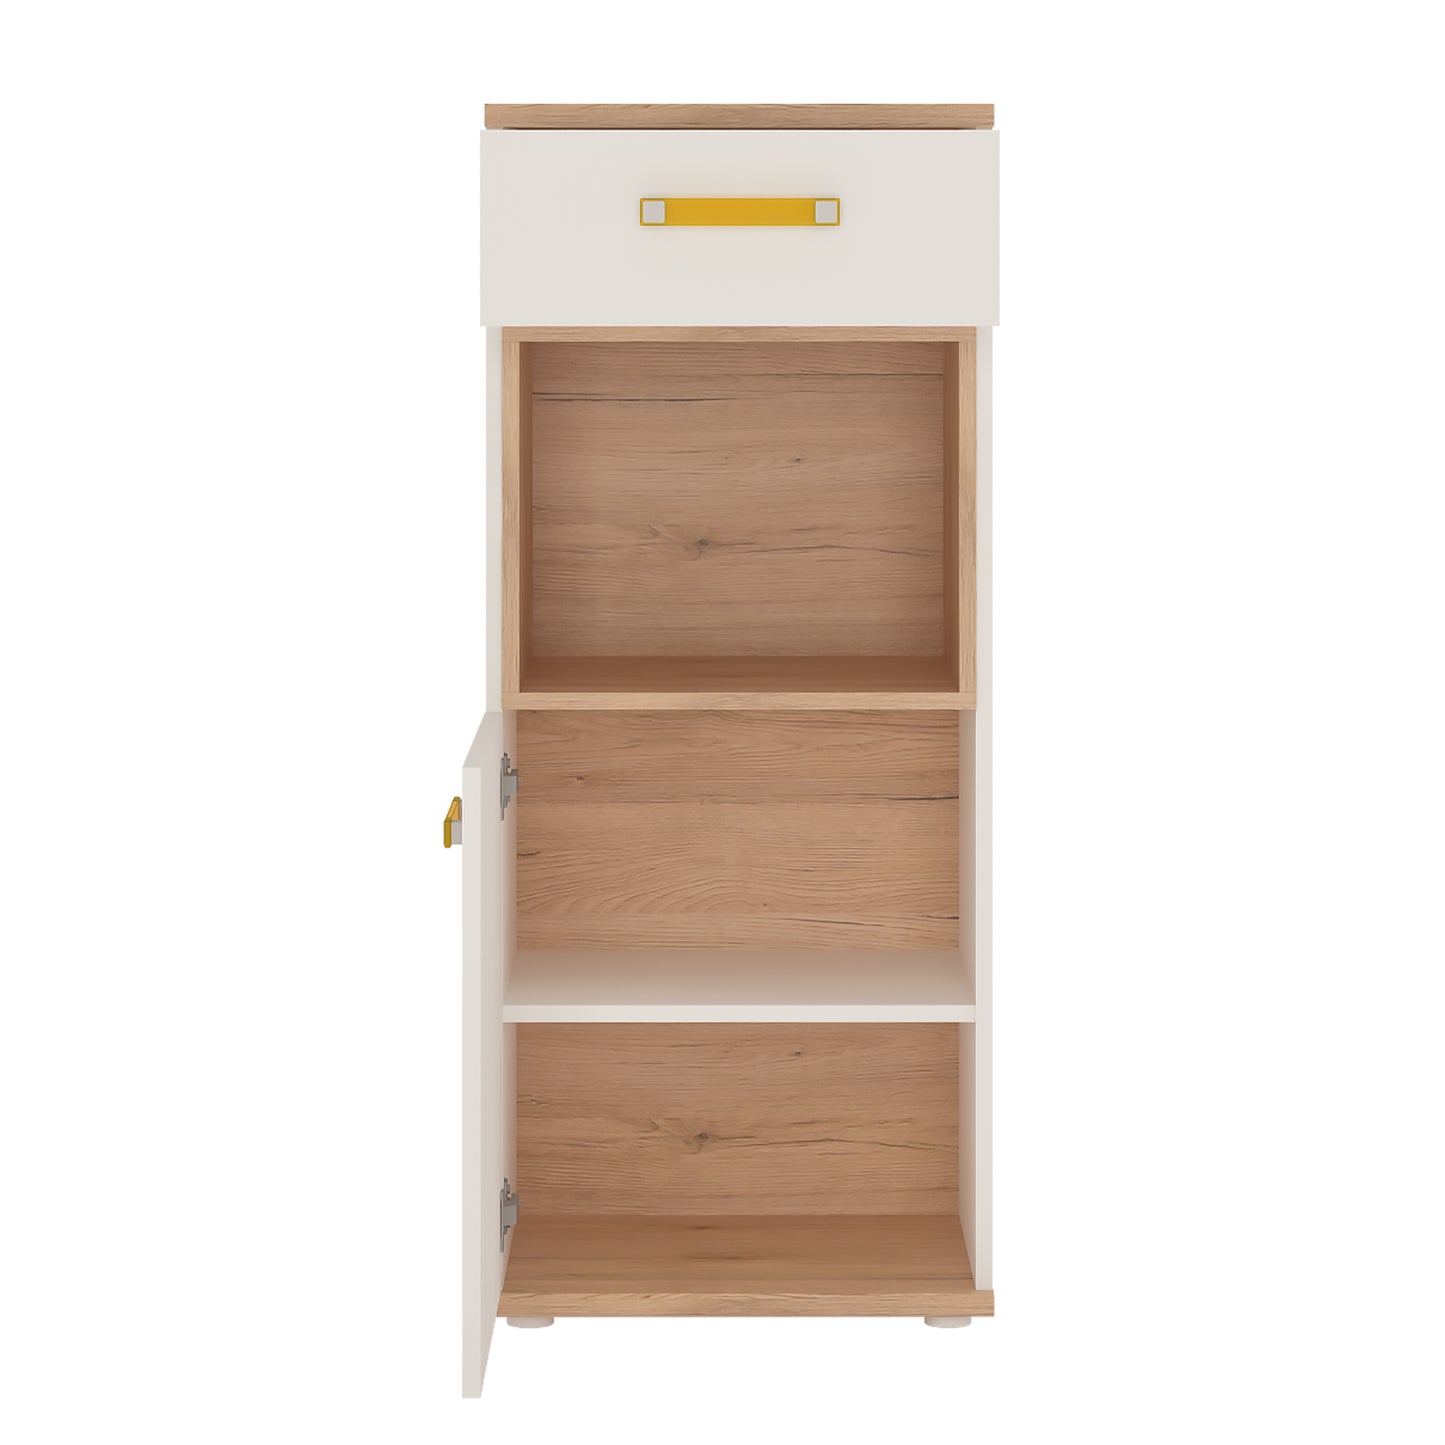 4Kids  1 Door 1 Drawer Narrow Cabinet in Light Oak and white High Gloss (orange handles)